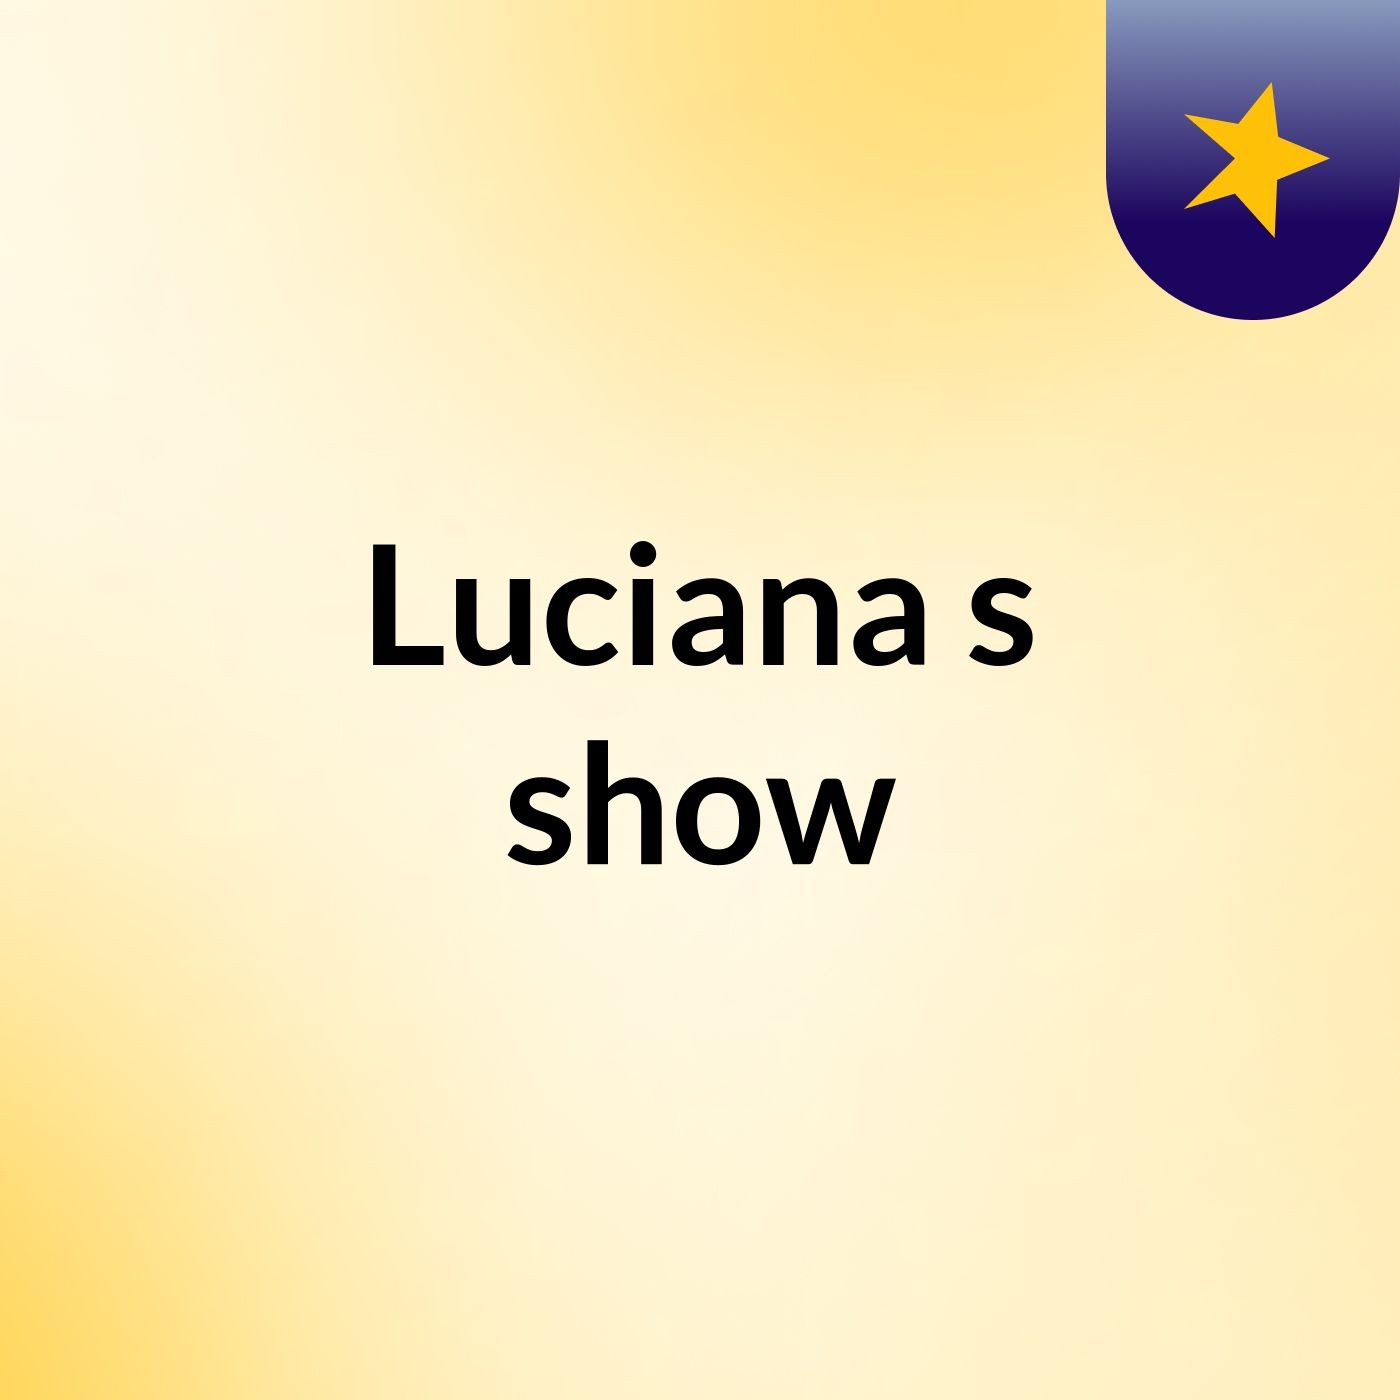 Luciana's show